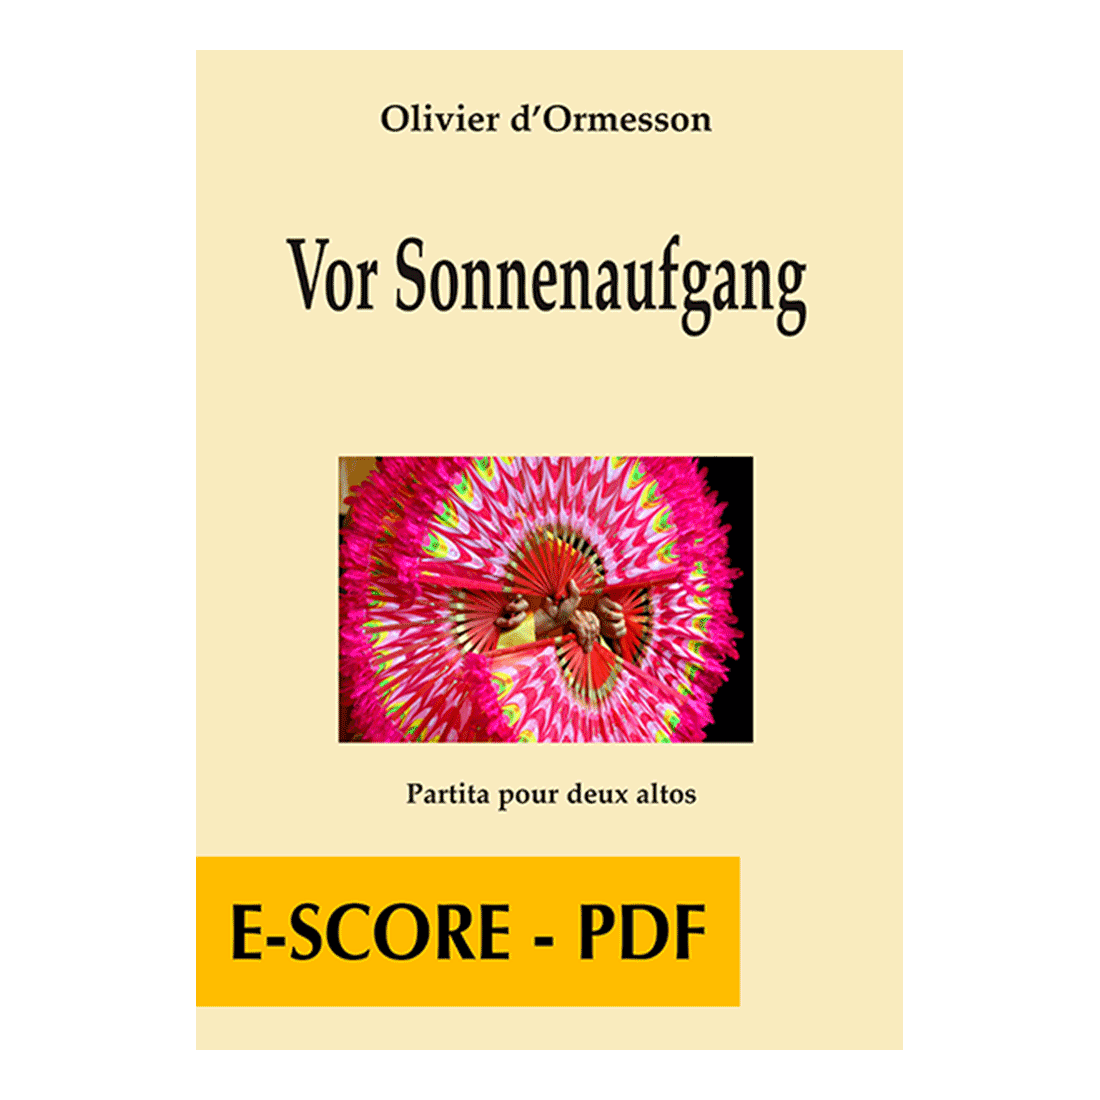 Vor Sonnenaufgang - Partita for 2 violas - E-score PDF